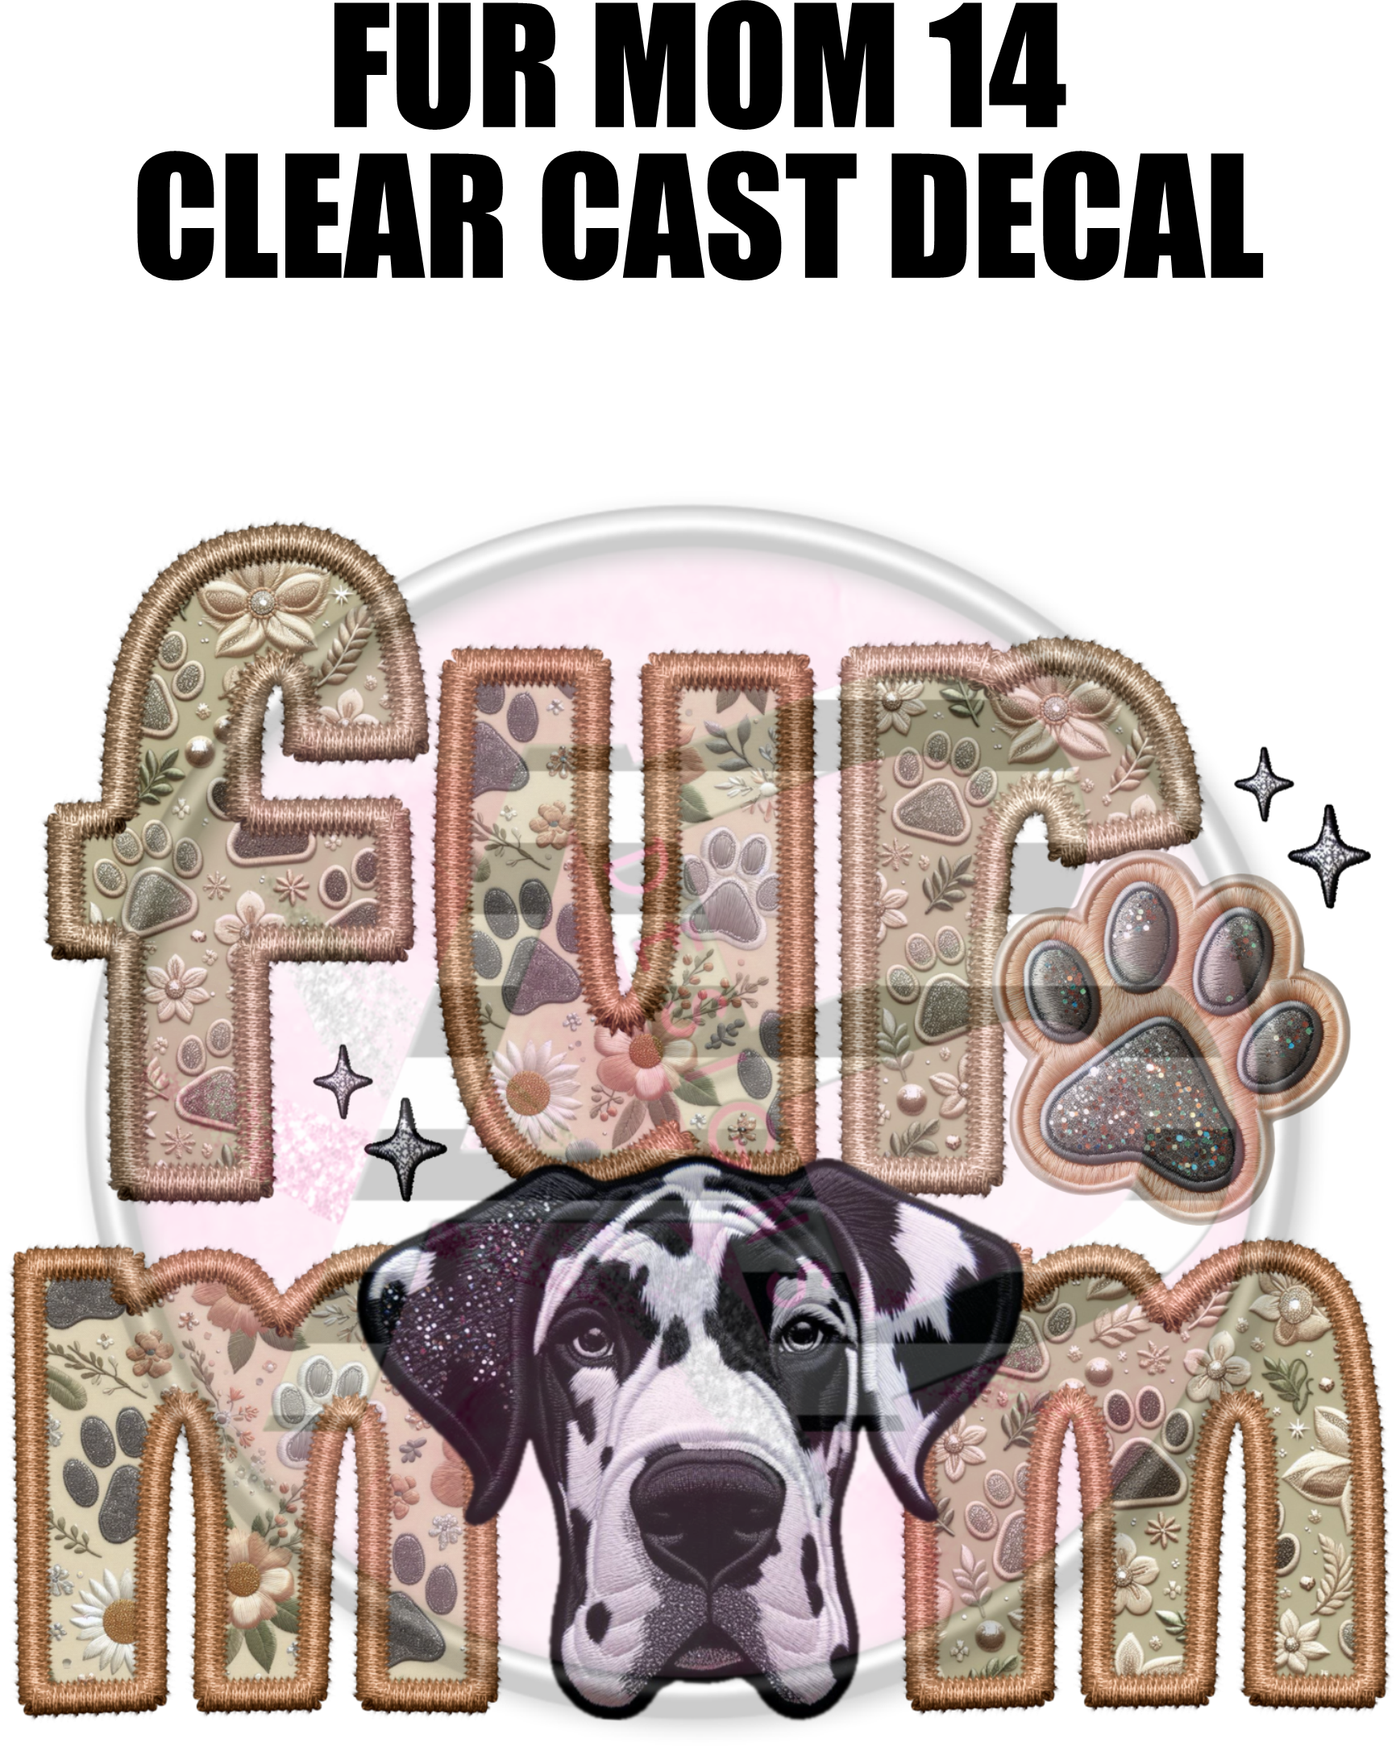 Fur Mom 14 - Clear Cast Decal